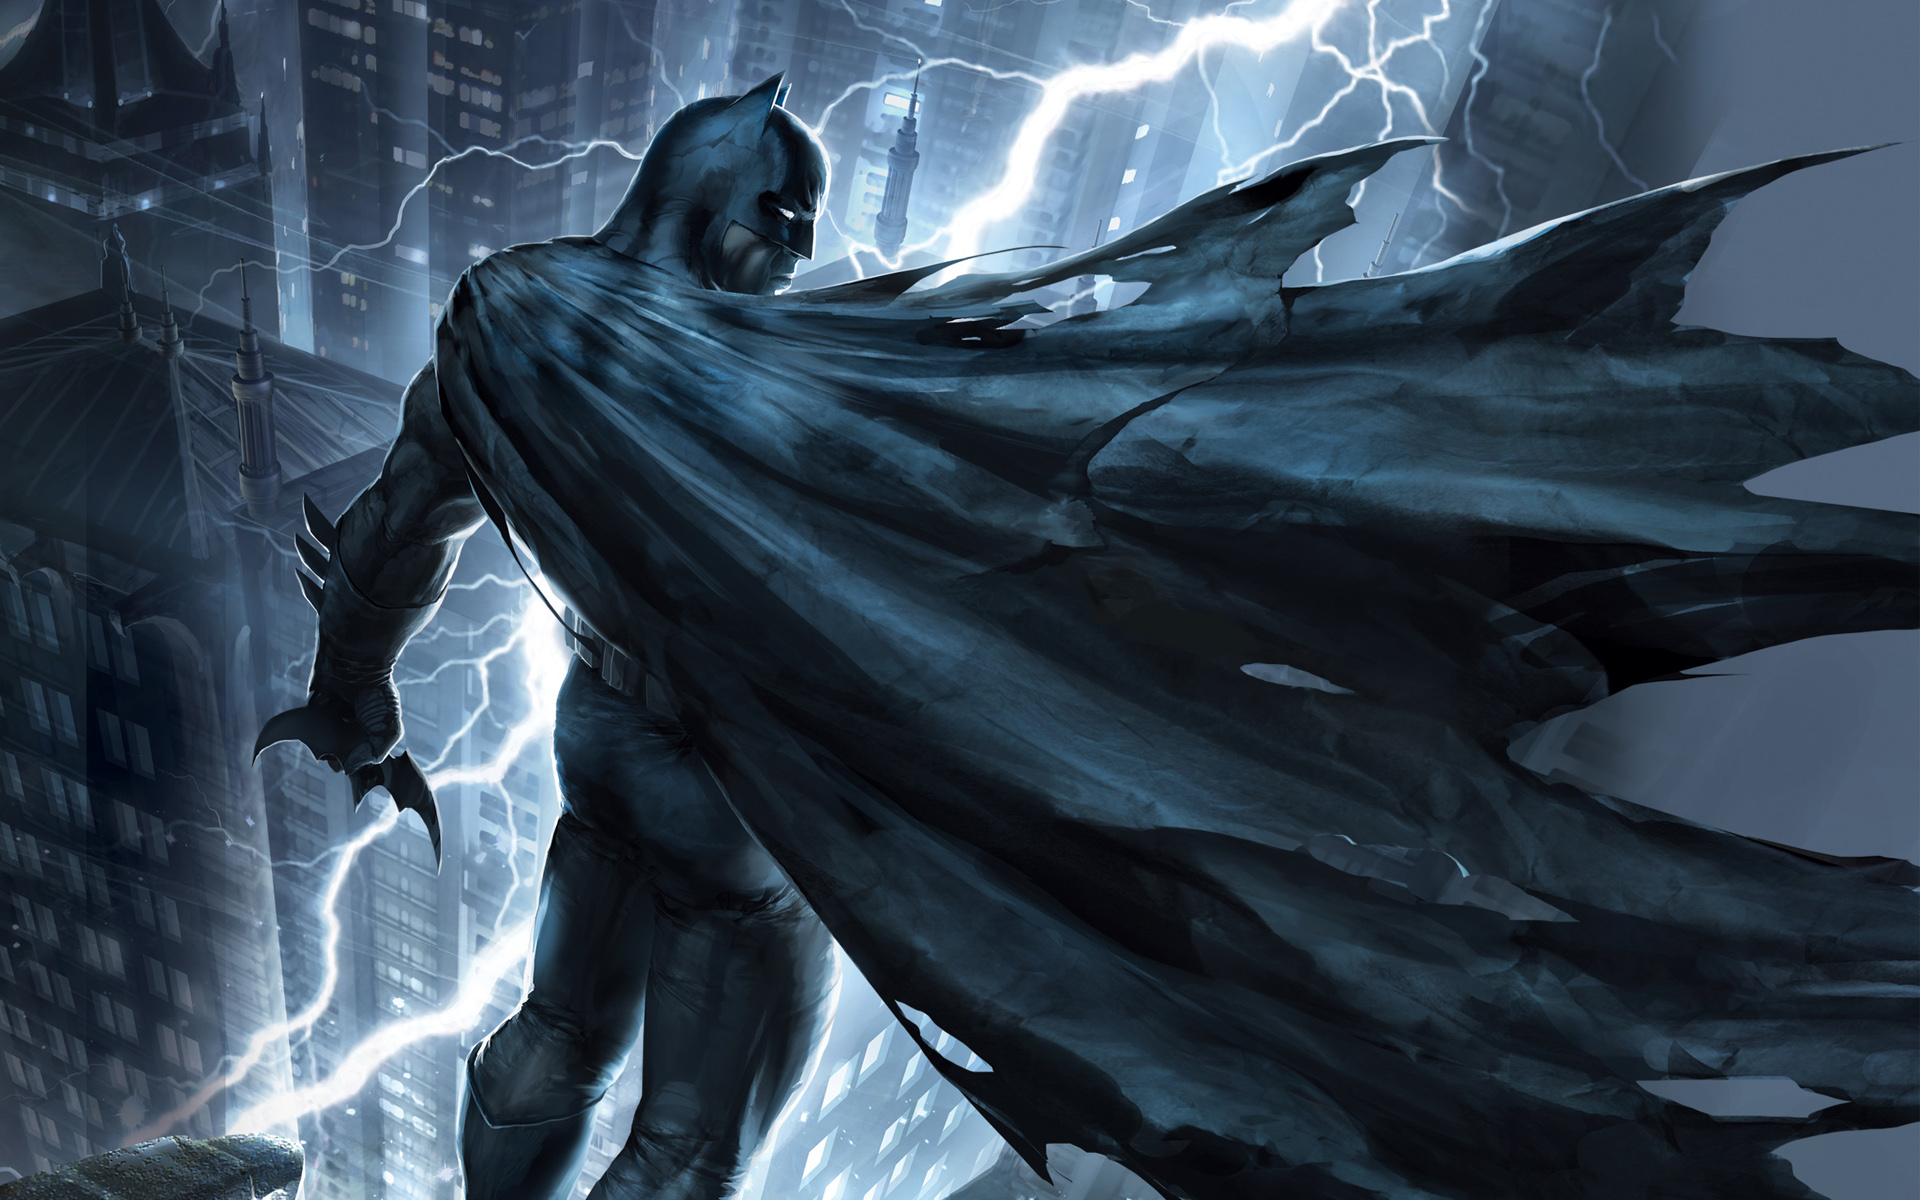 Batman The Dark Knight Rises Portugu S Br Vers O Editada Sem